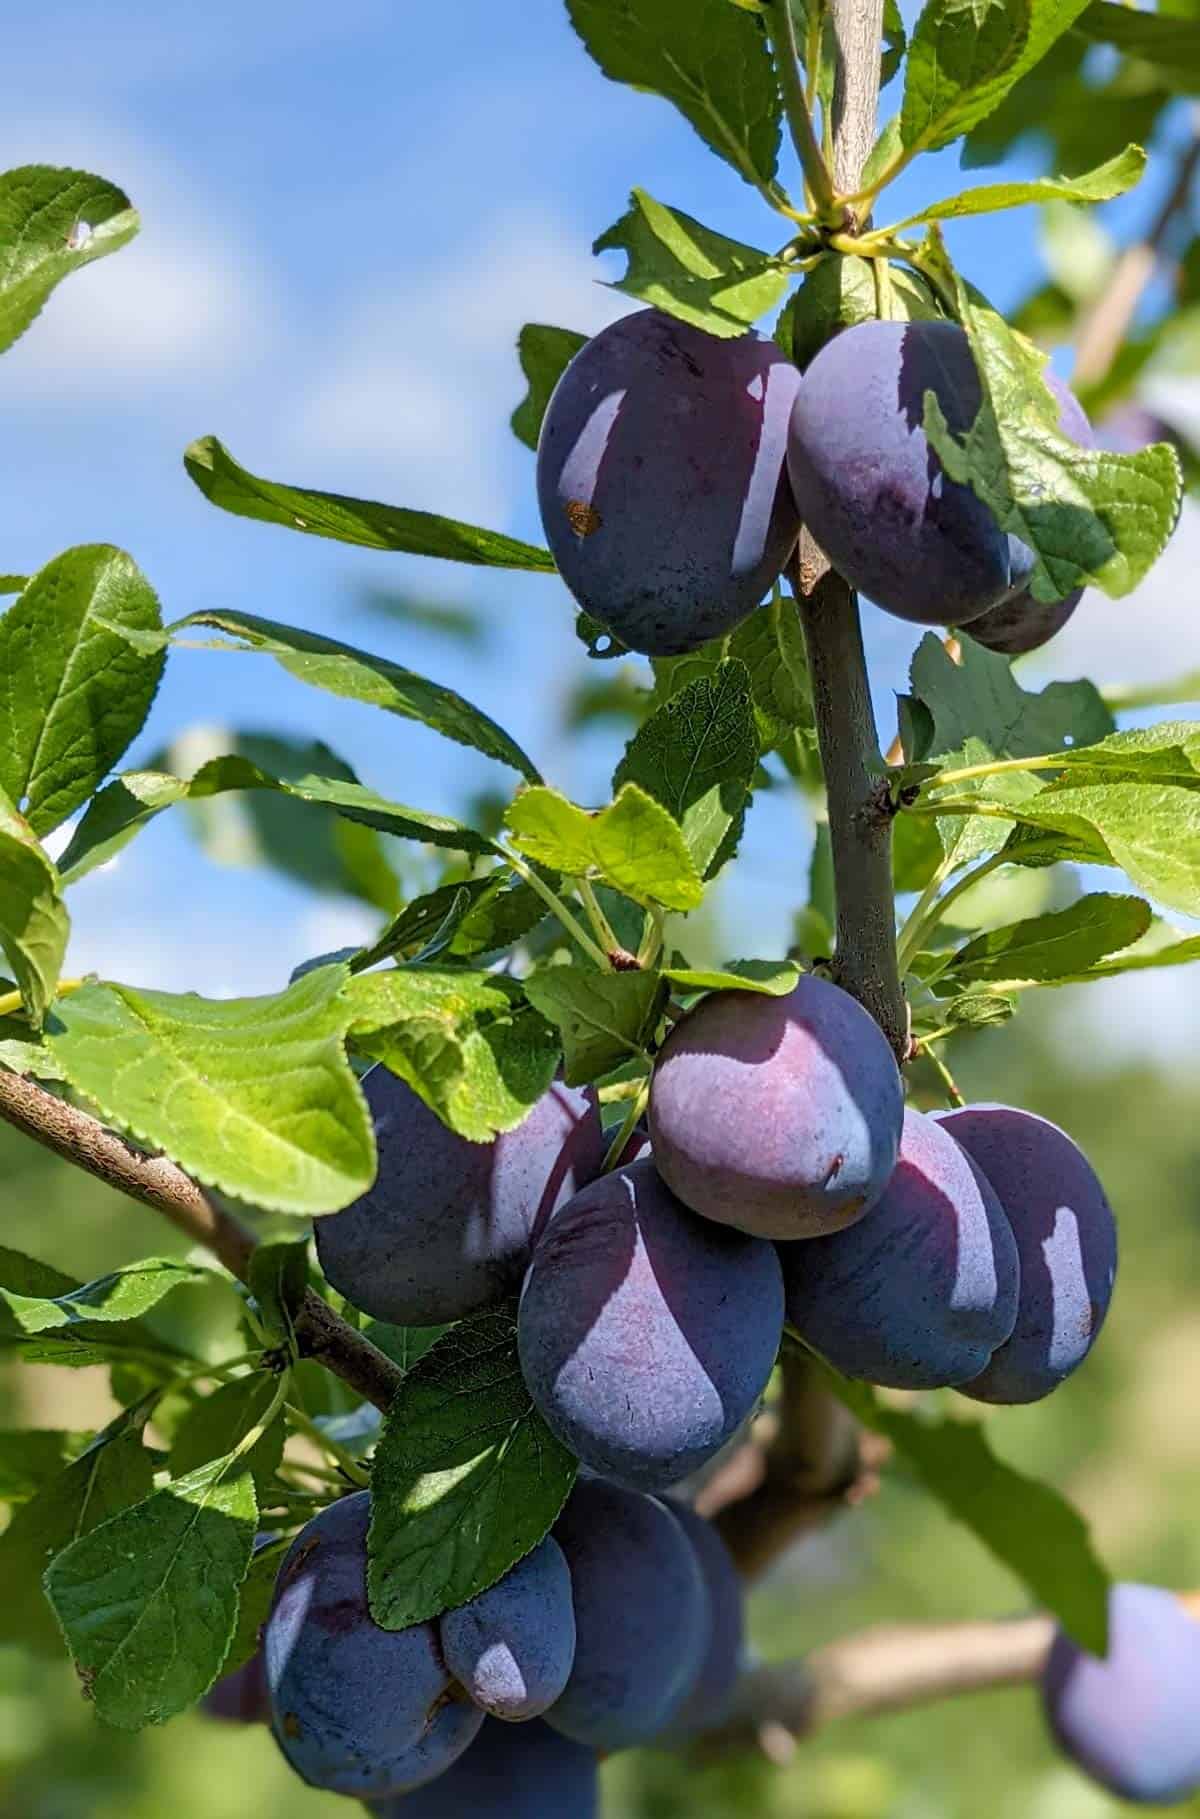 Italian prune plums on a tree